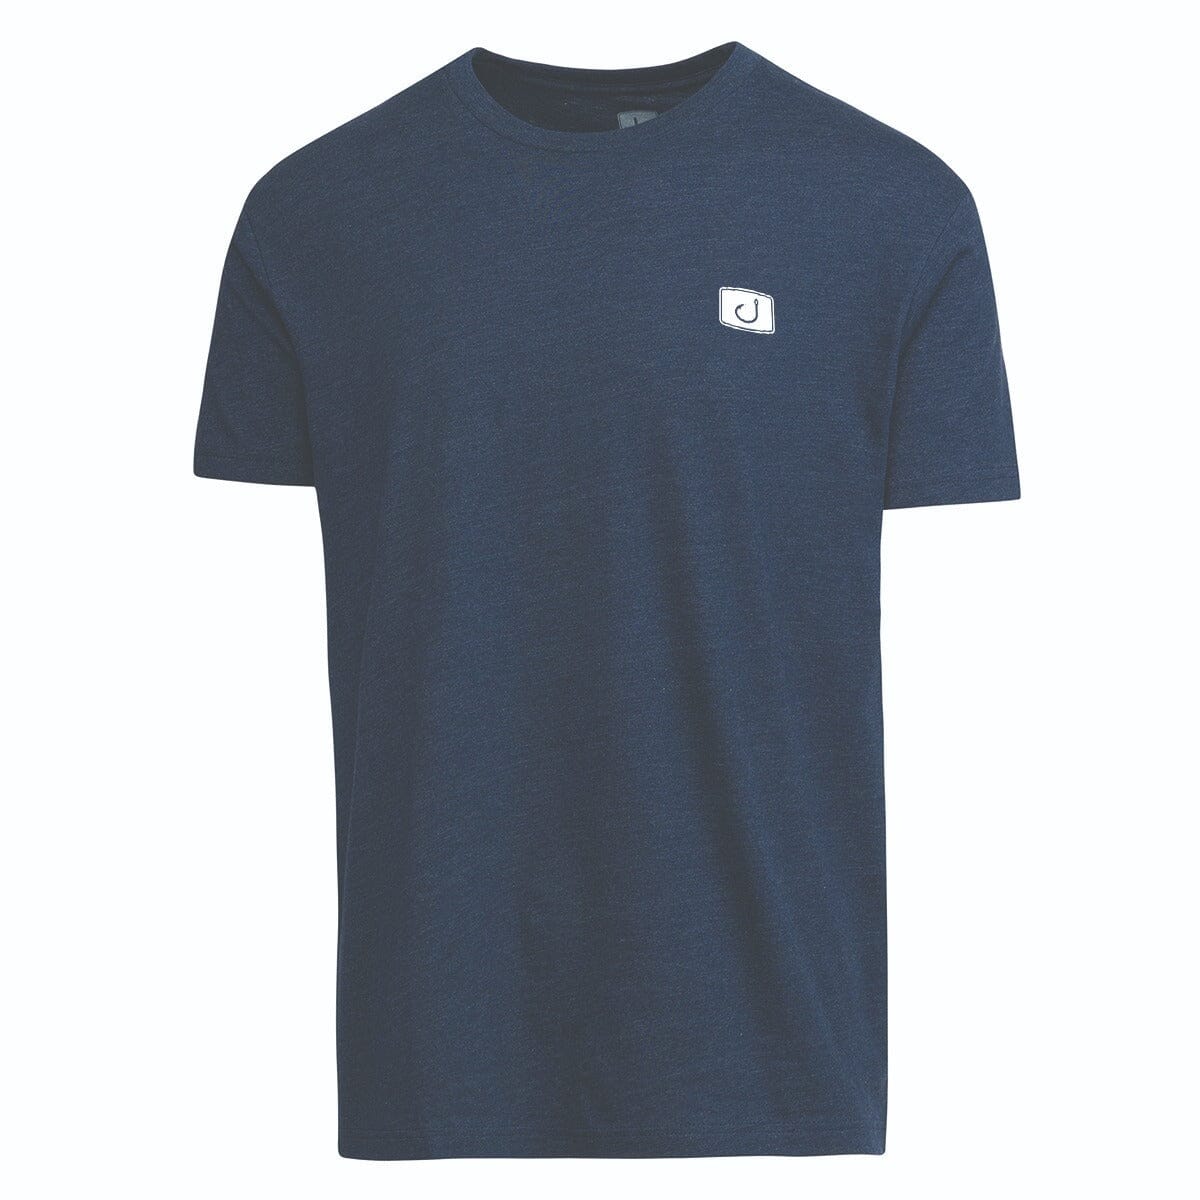 Avid Gear Fishing Salt Water Adult LS T-Shirt Outdoor Style and Comfort LS  T-Shirt - Marlin Sunset Navy, Size: Medium